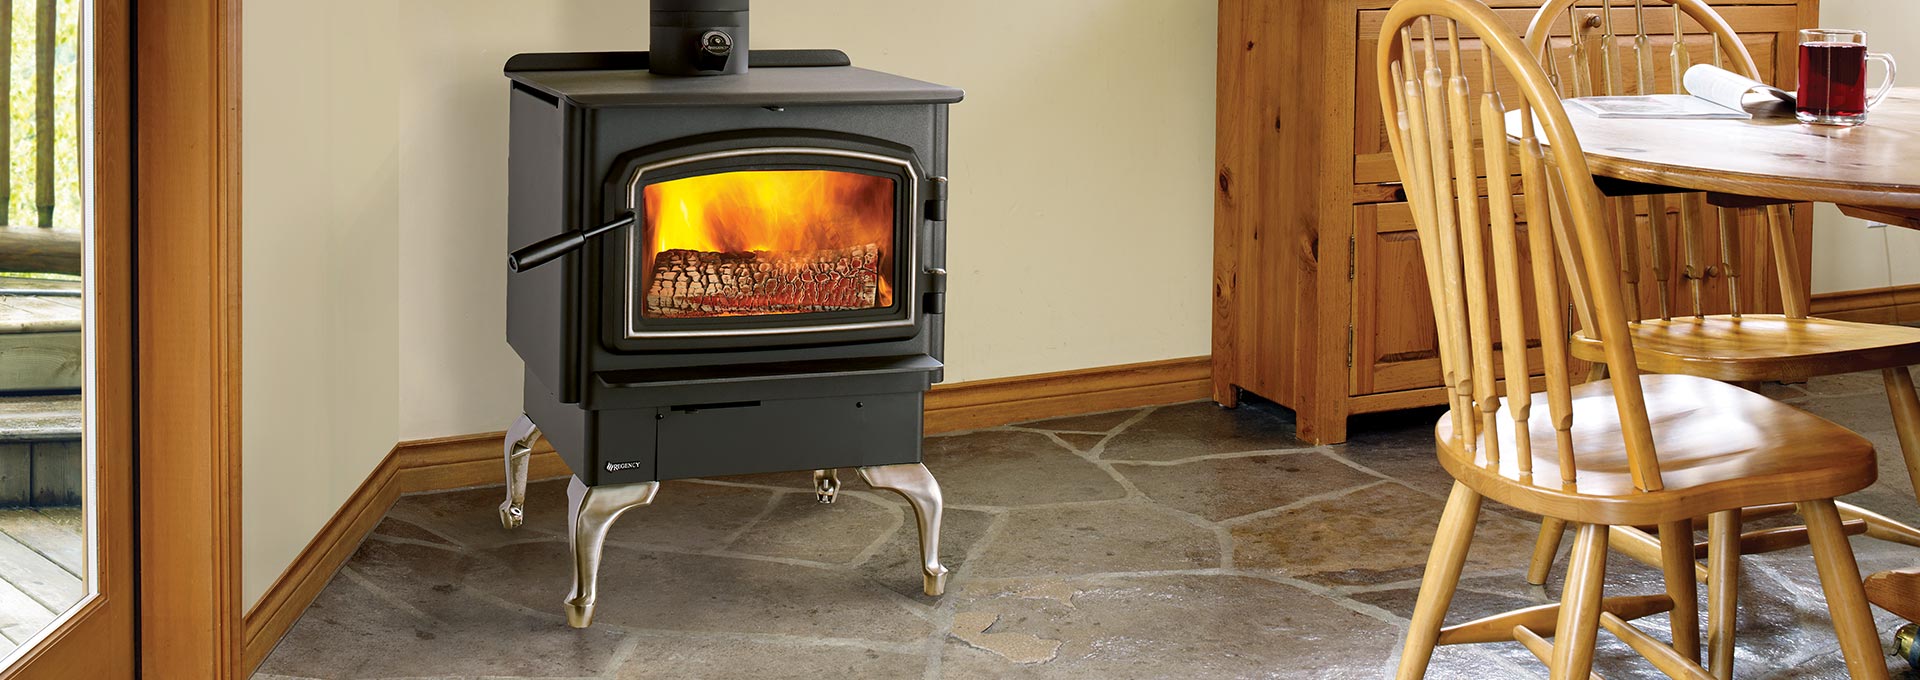 Osburn Fireplace Insert New Wood Stoves